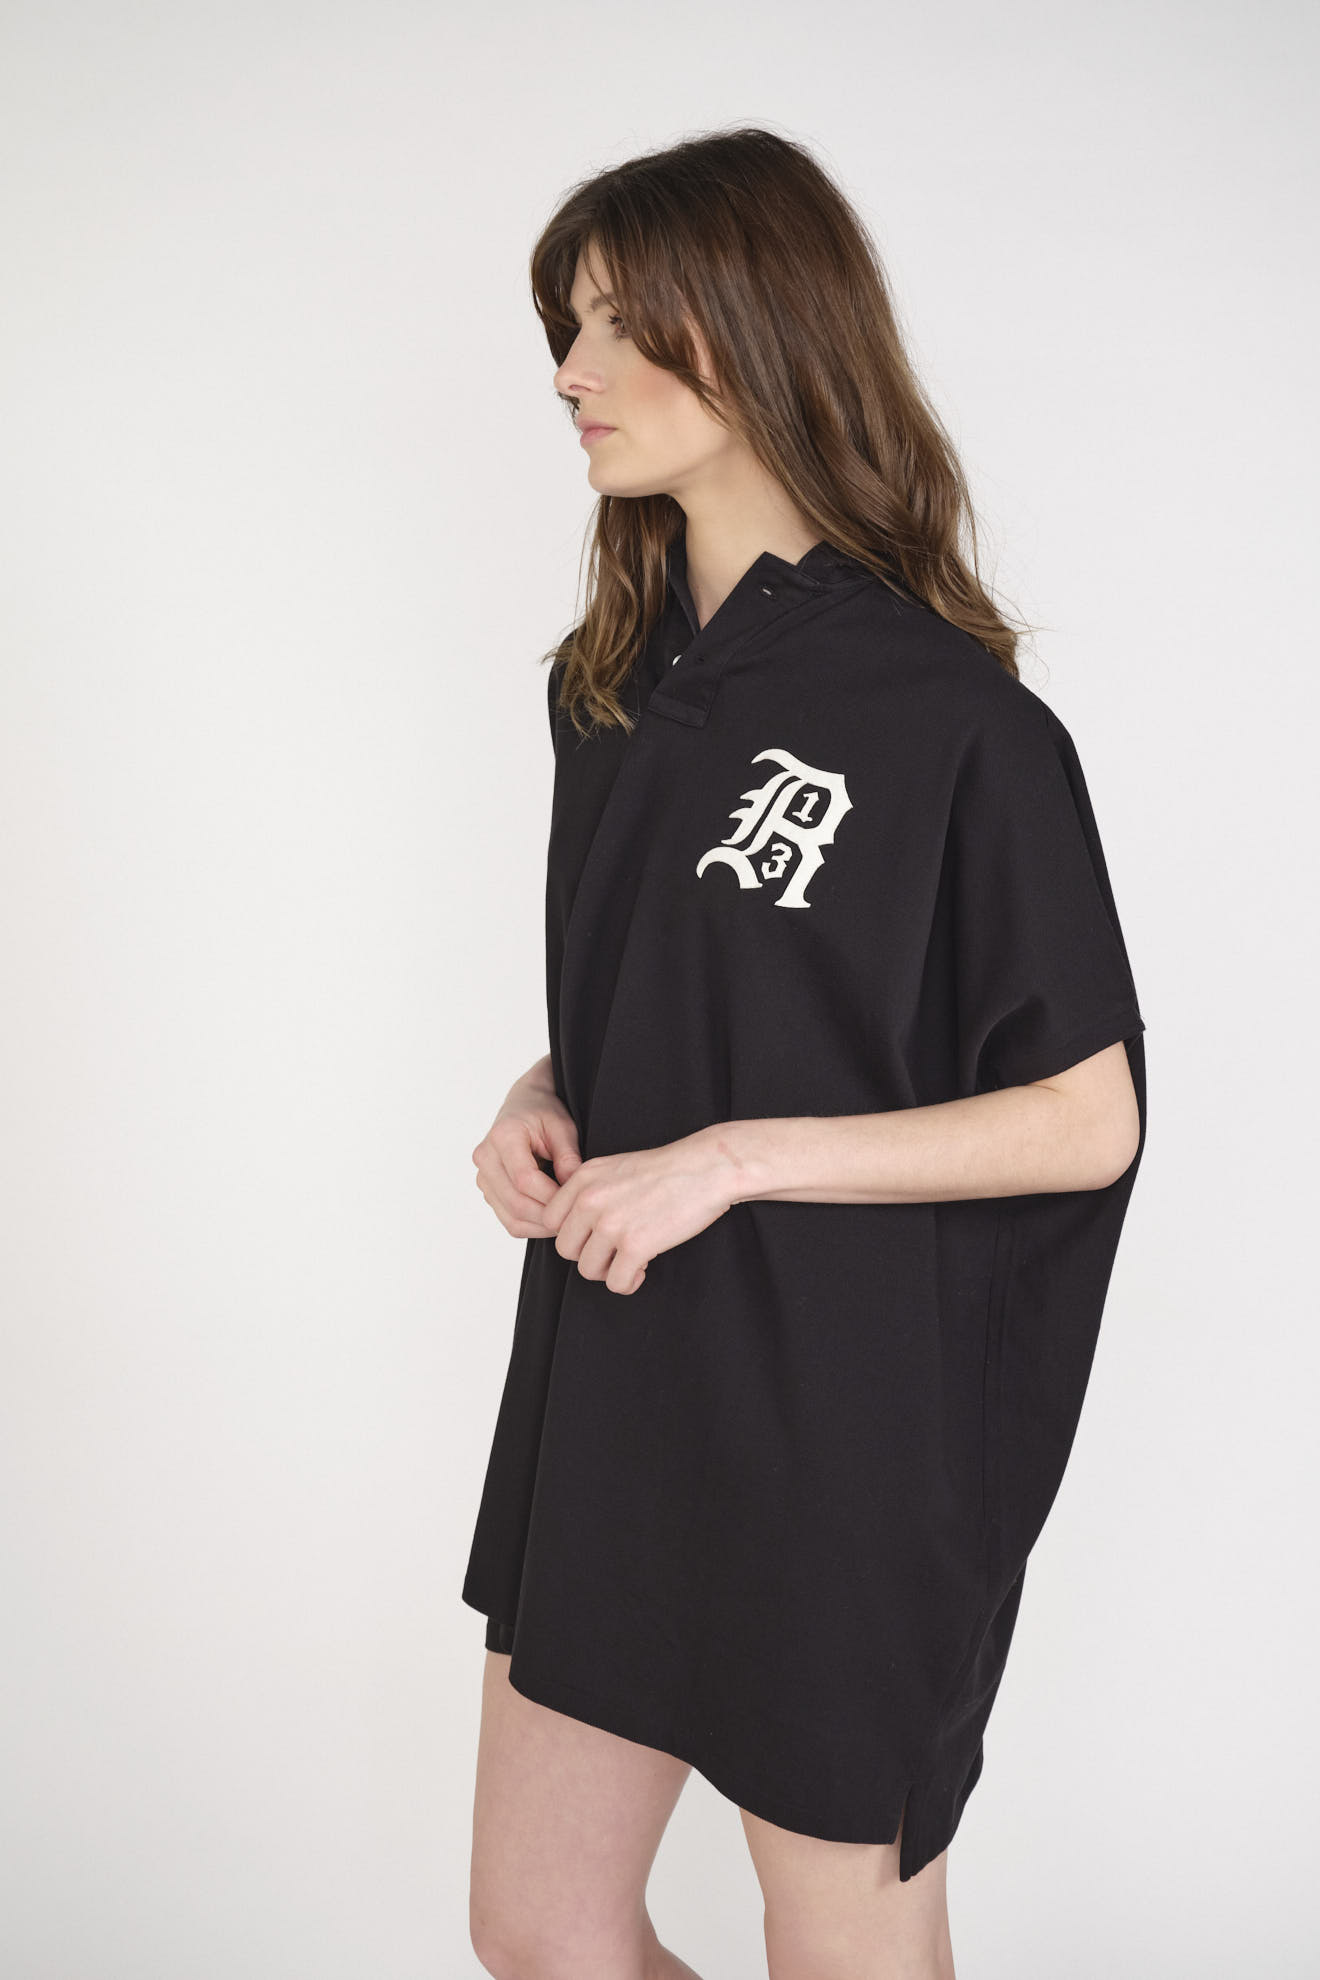 R13 Logo Polo Shirt Dress - T-shirt dress with logo print black S